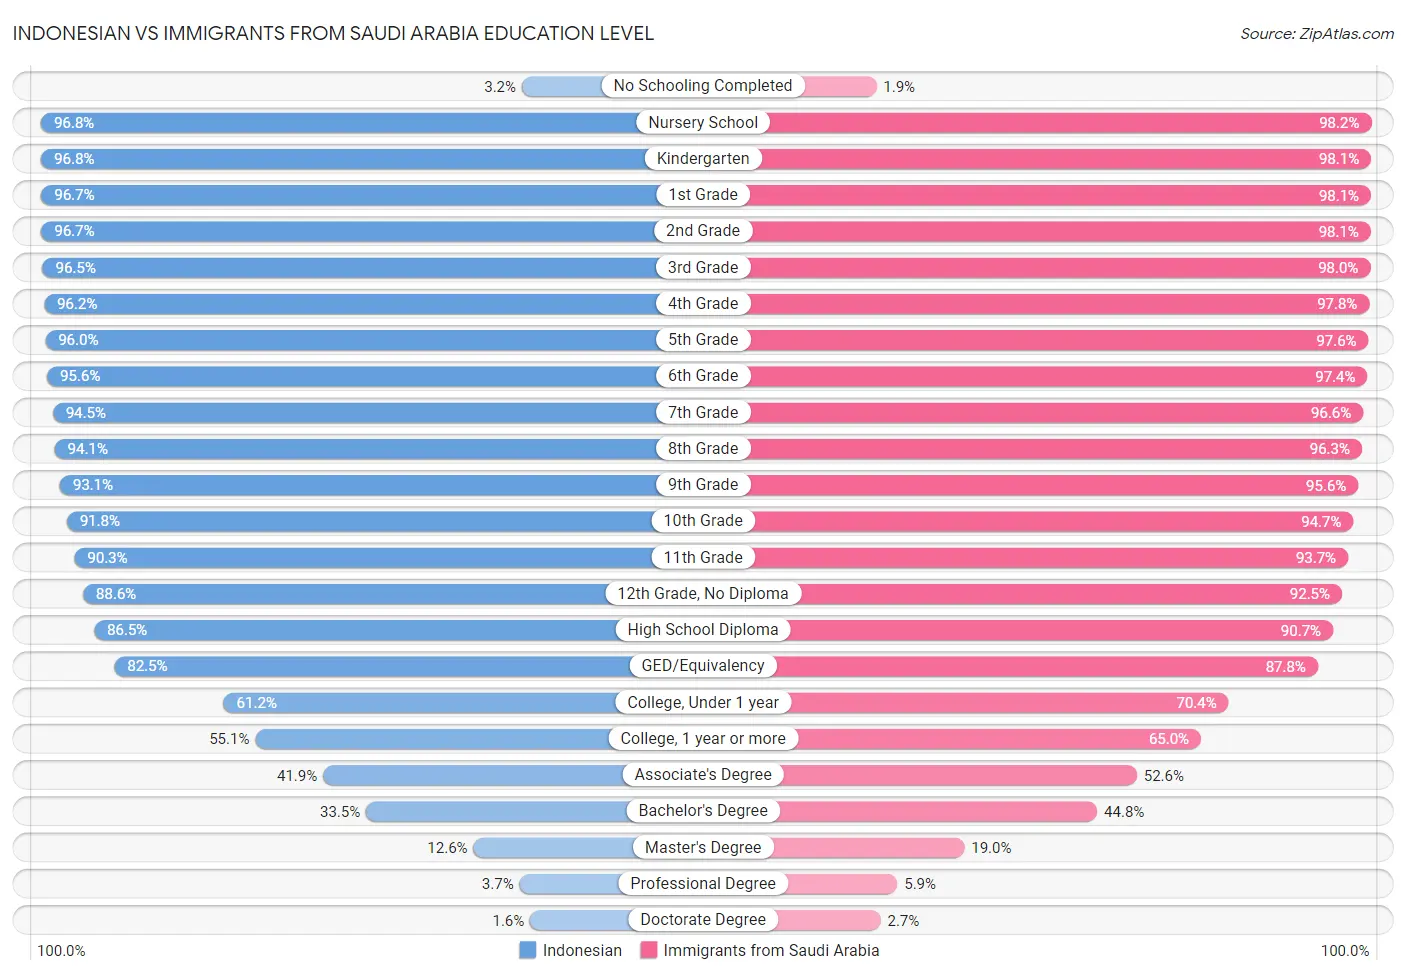 Indonesian vs Immigrants from Saudi Arabia Education Level